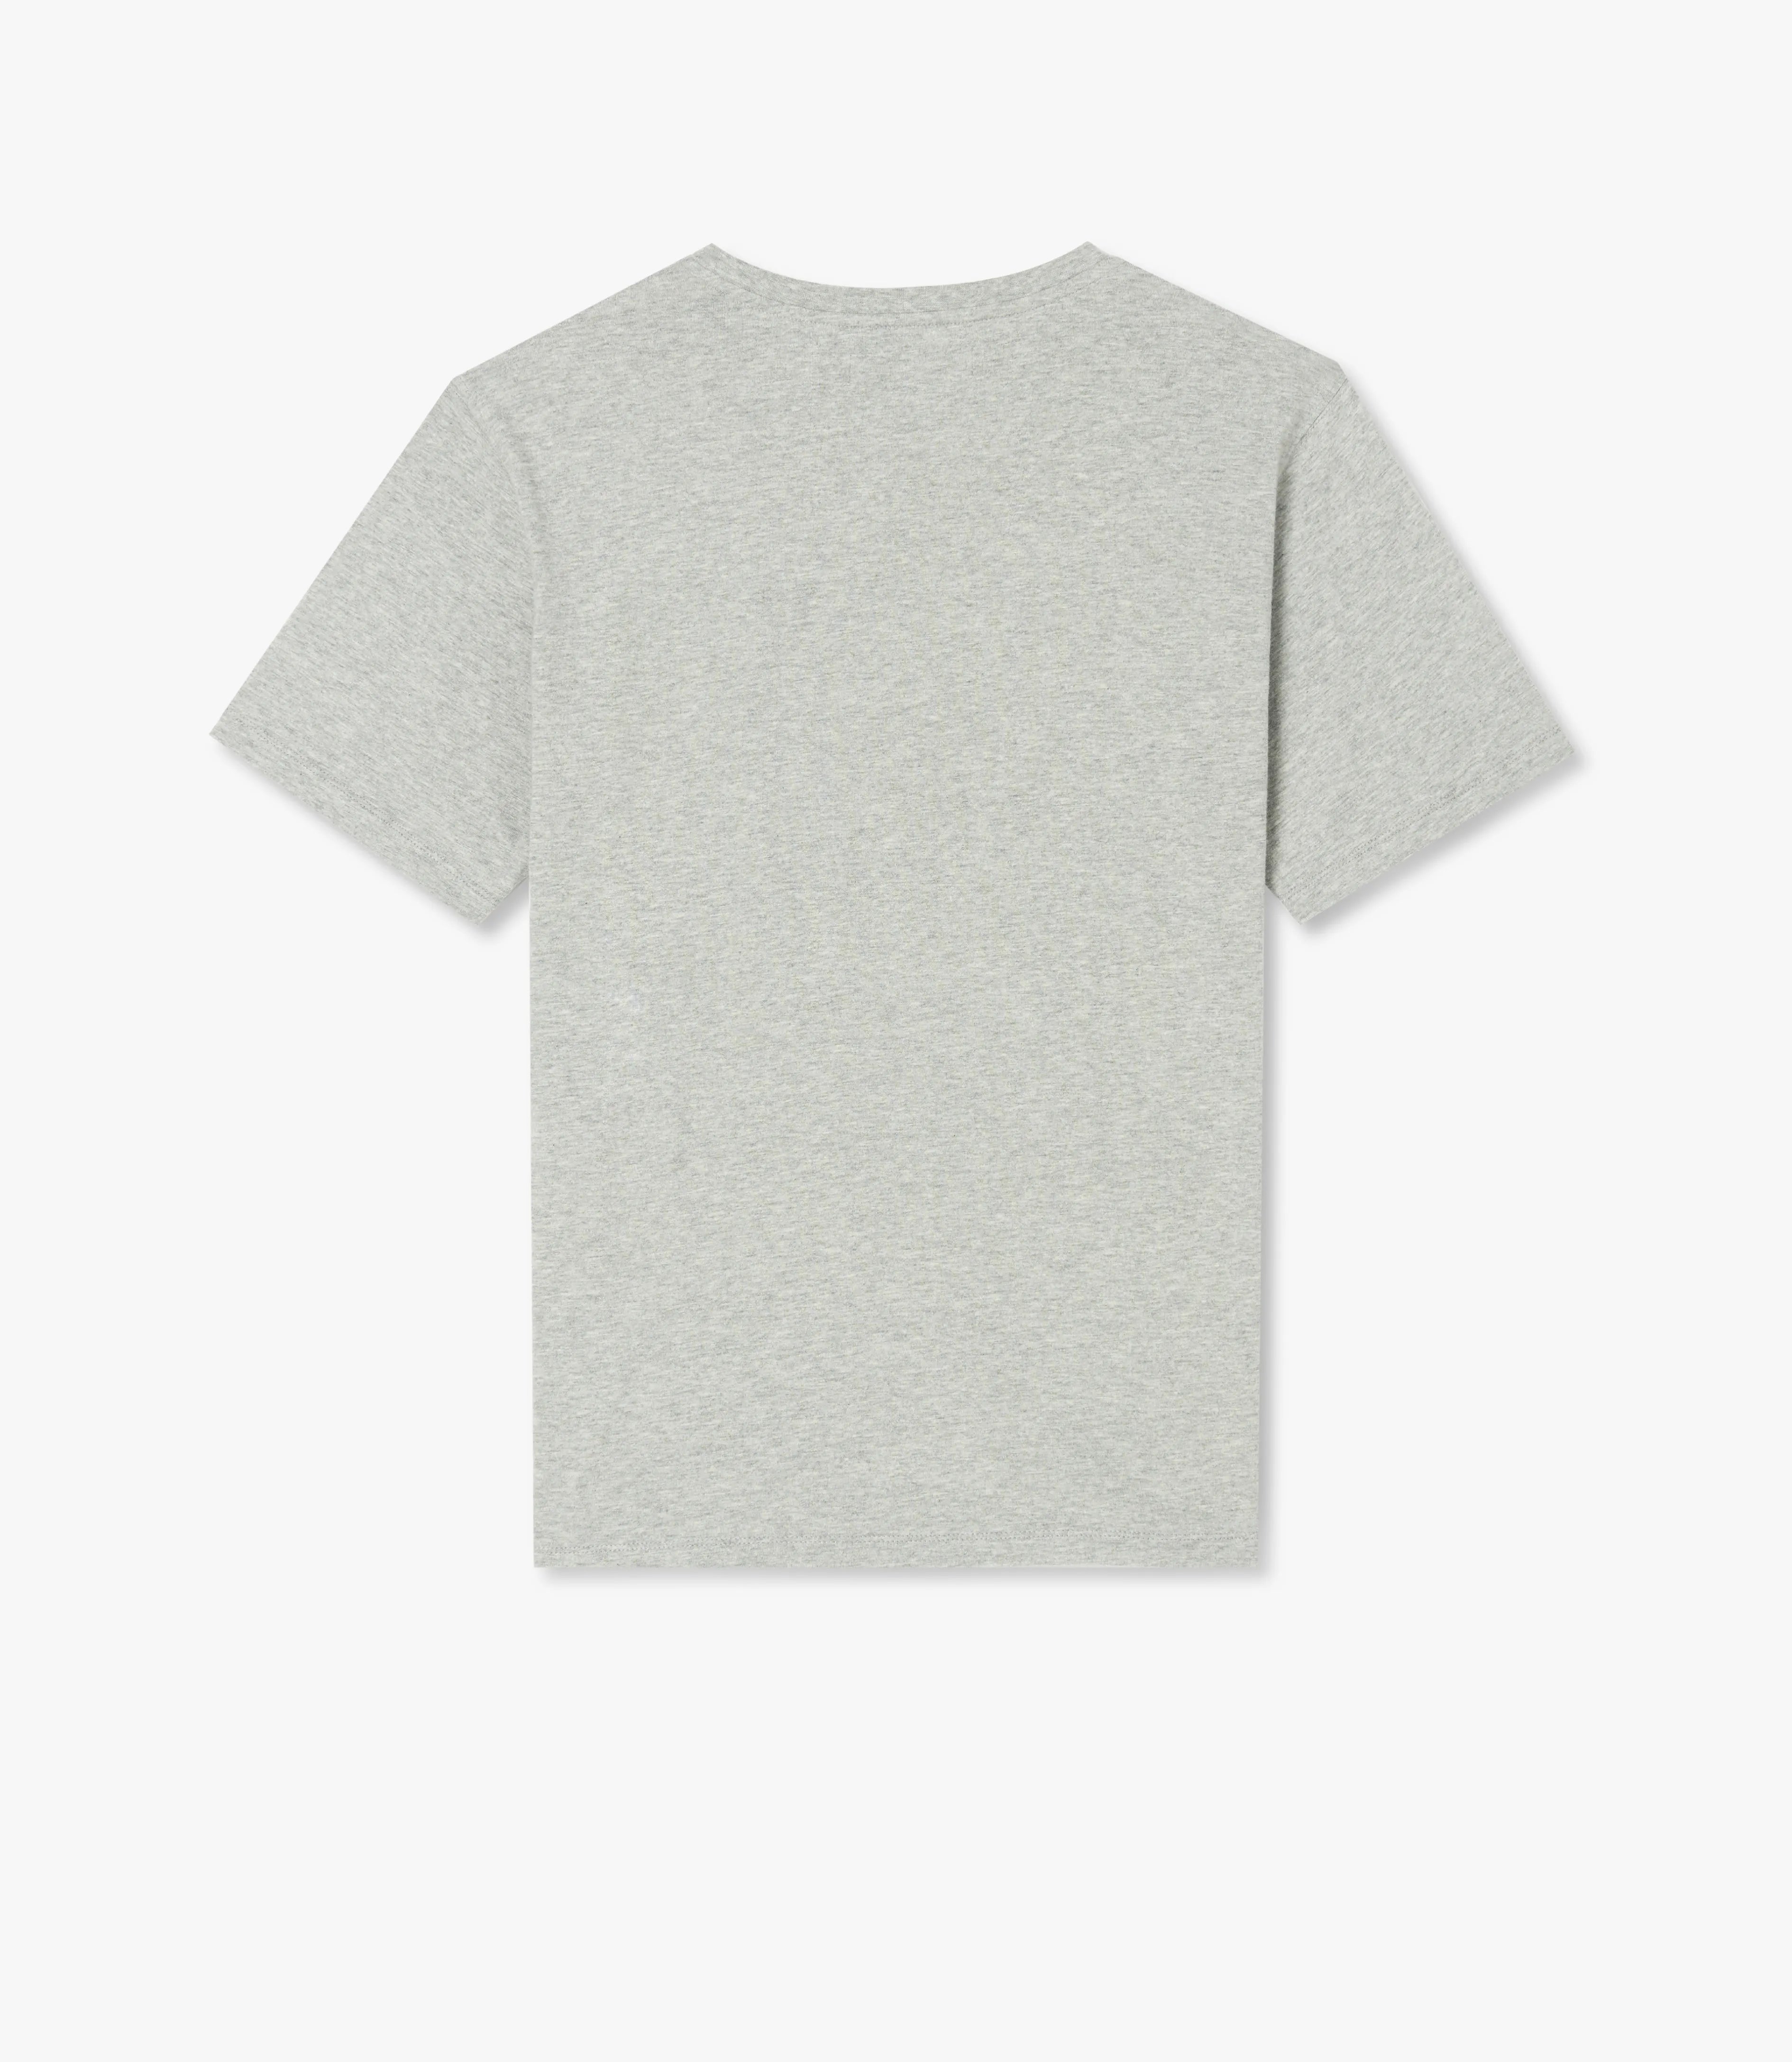 Parson T-shirt - Grey Marle/Chestnut